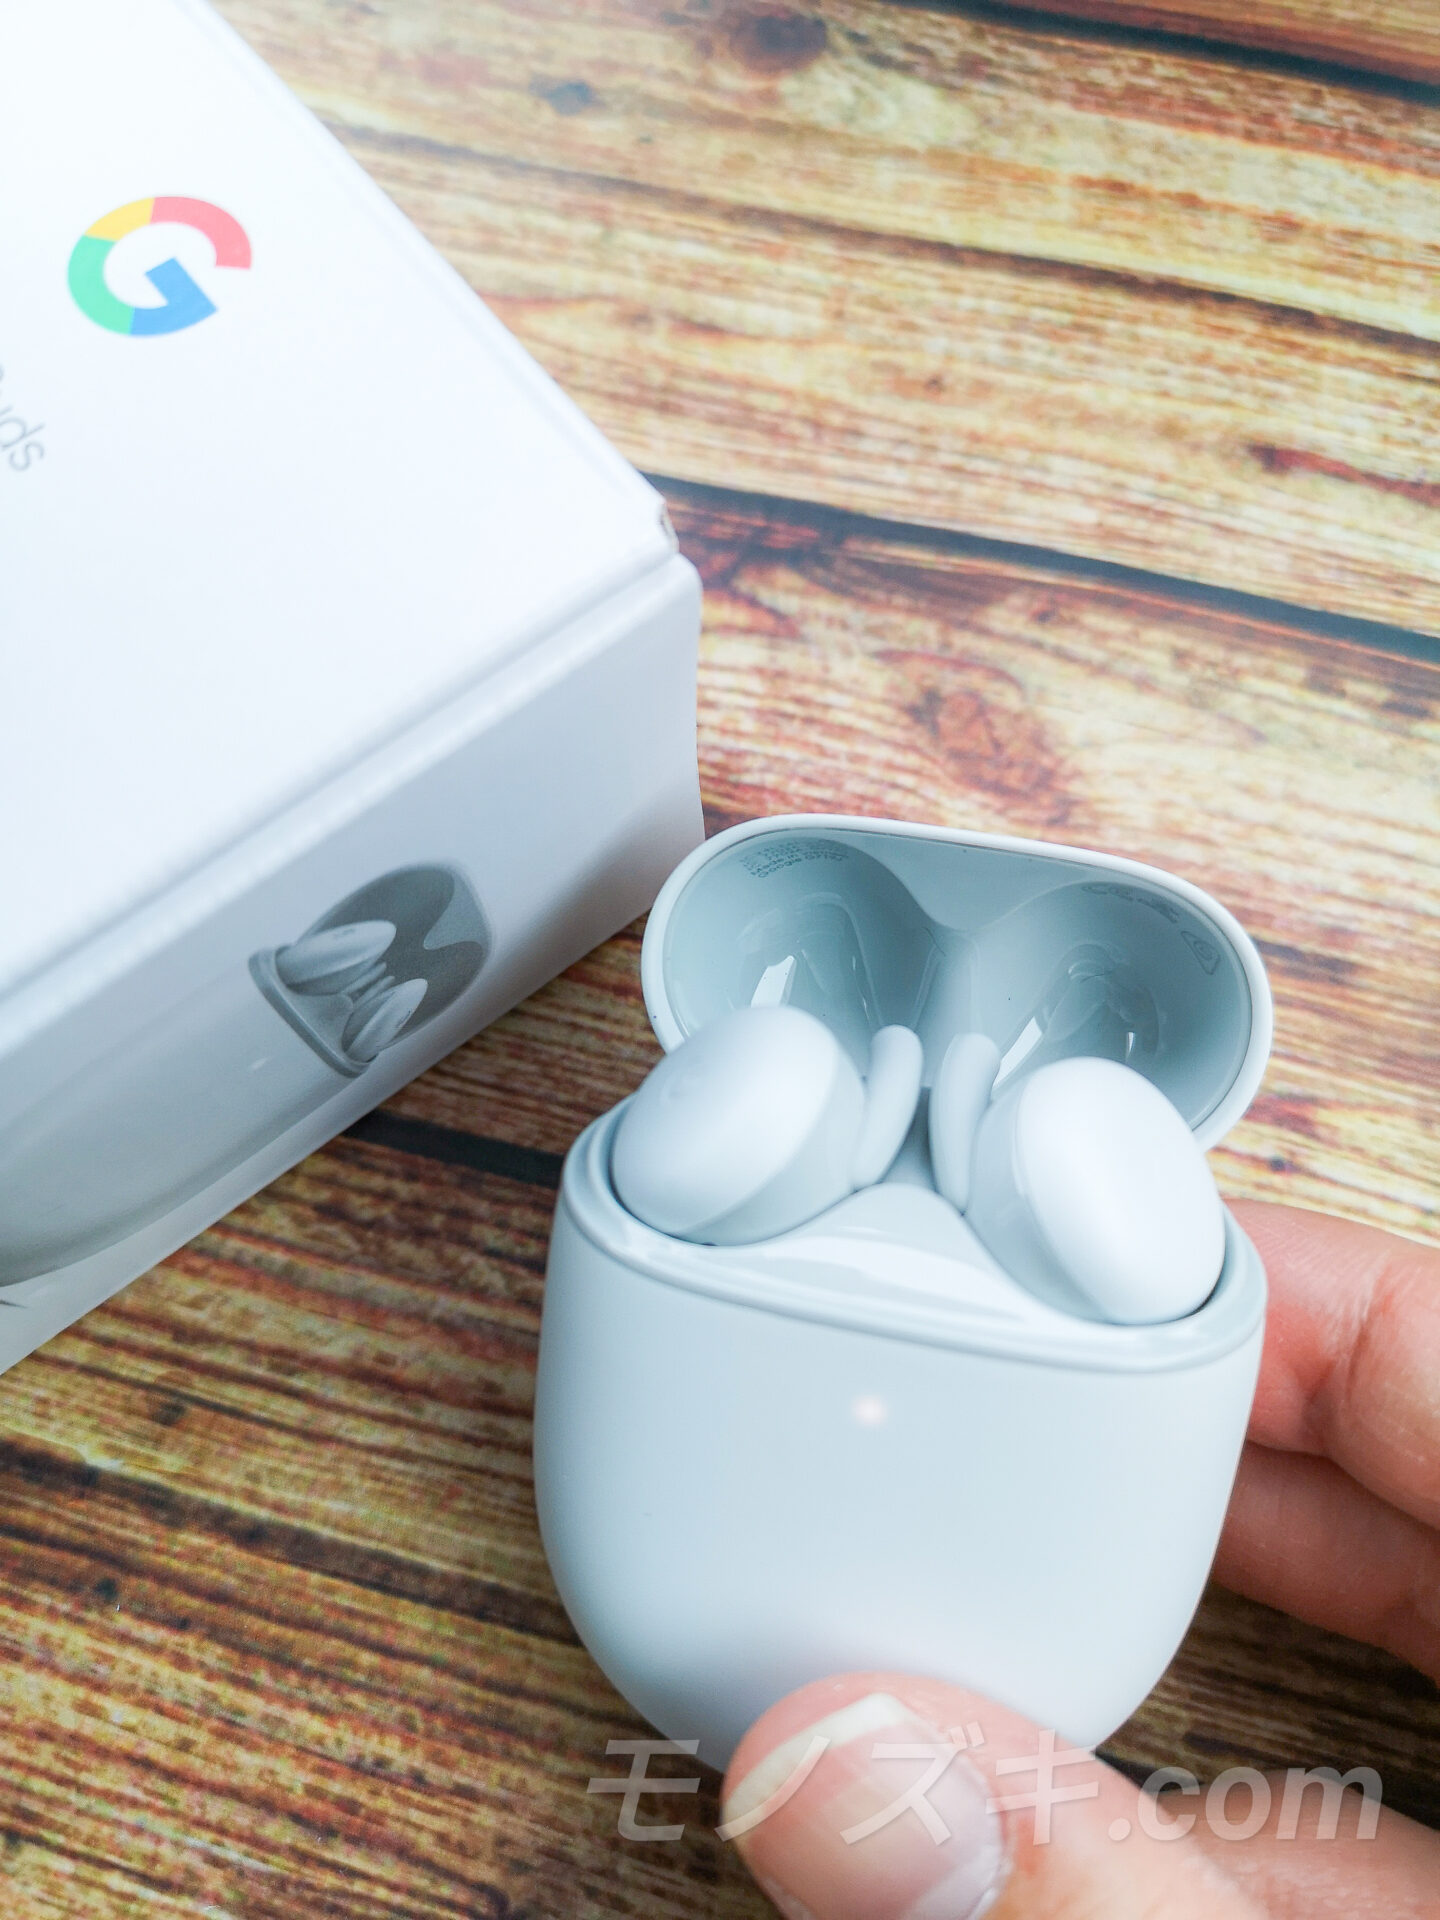 Googleの完全ワイヤレスイヤホンPixel Buds A-Seriesをレビュー。接続安定性と軽快な着用感が超優秀 | モノズキ.com